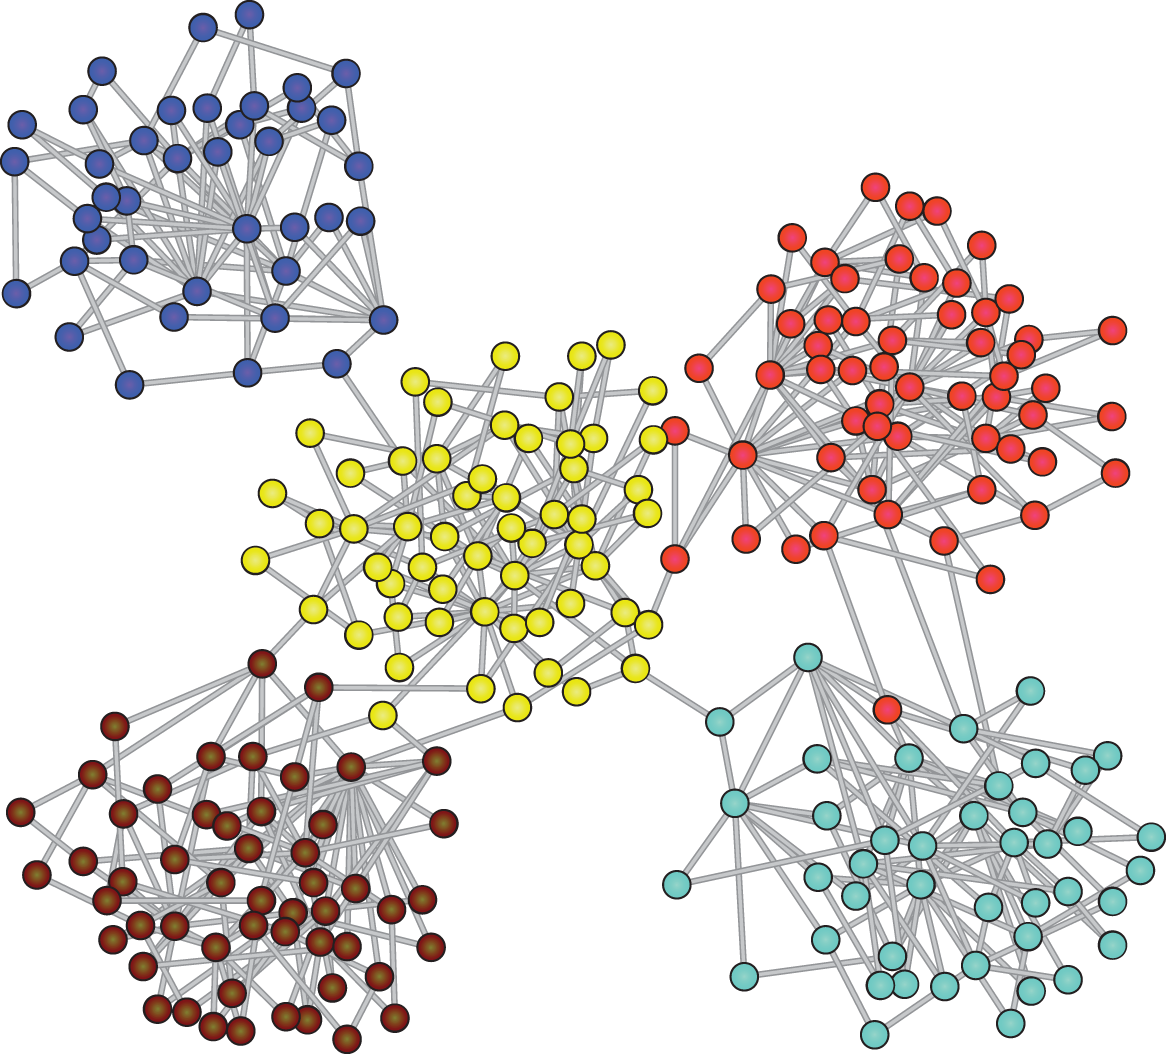 Clusters network. Кластеризация нейросети. Кластеризация рисунок. Интересные кластеры. Кластеризация в сети это.